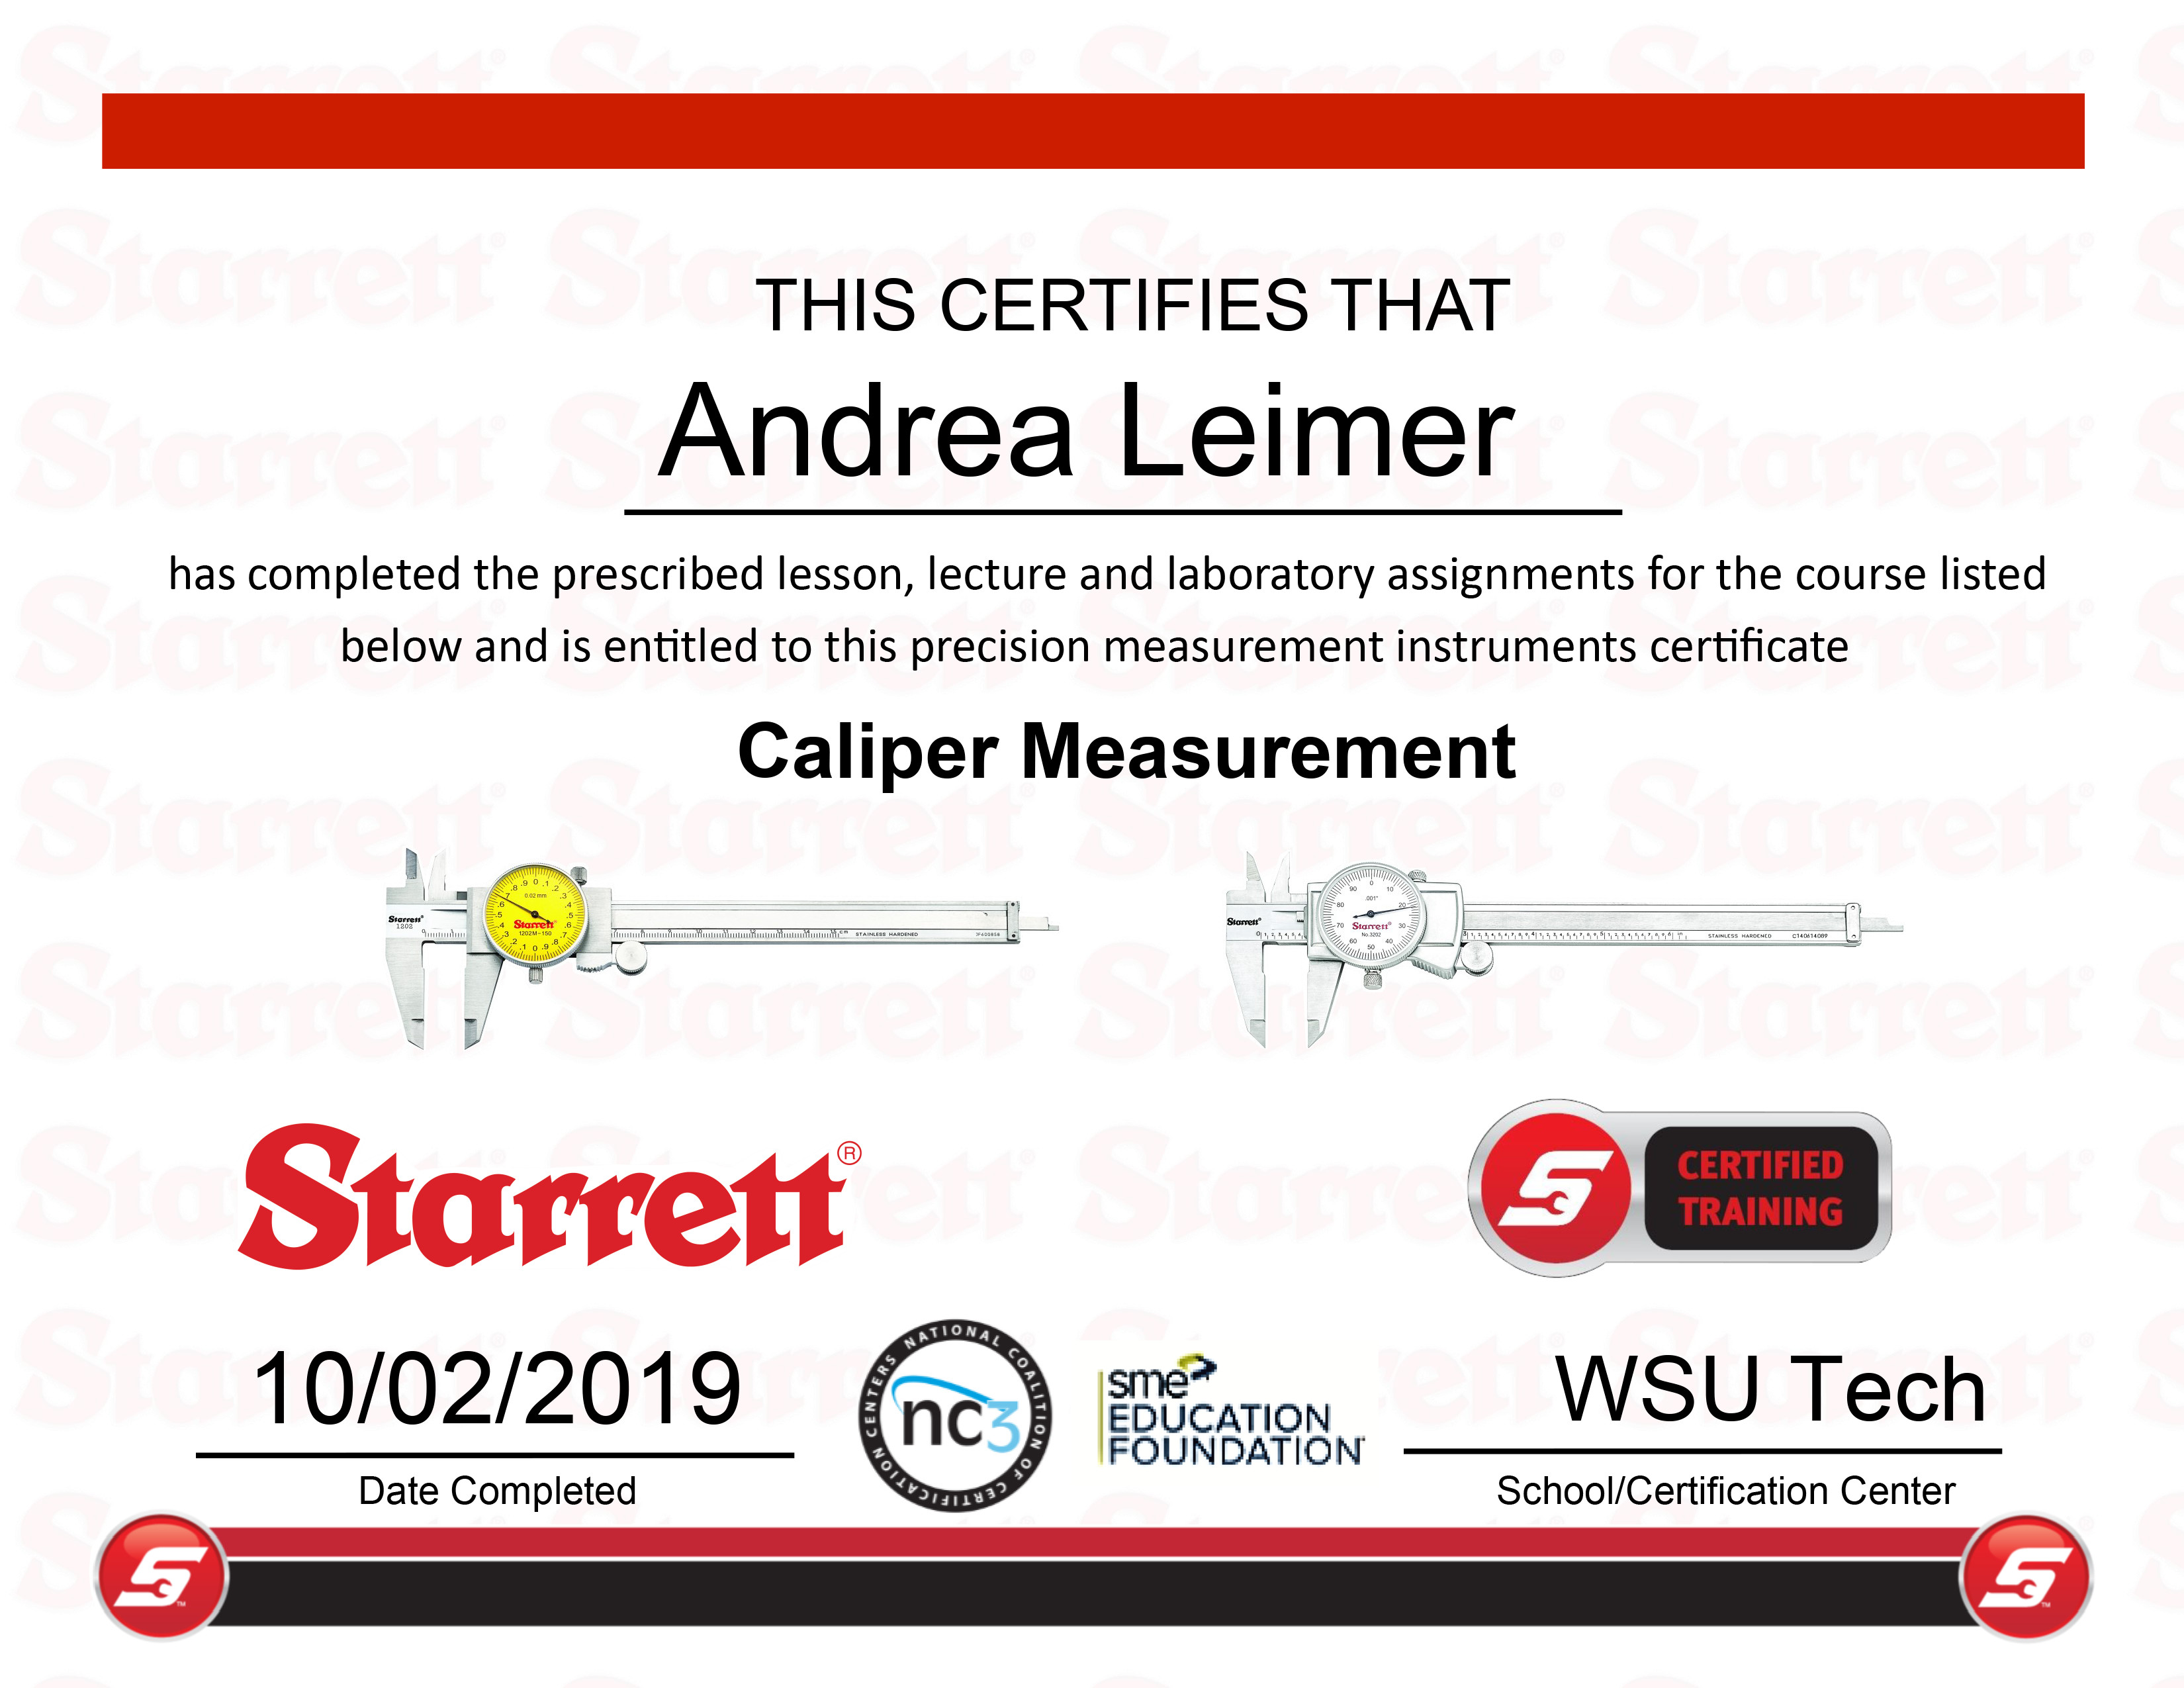 Caliper Measurement Certification